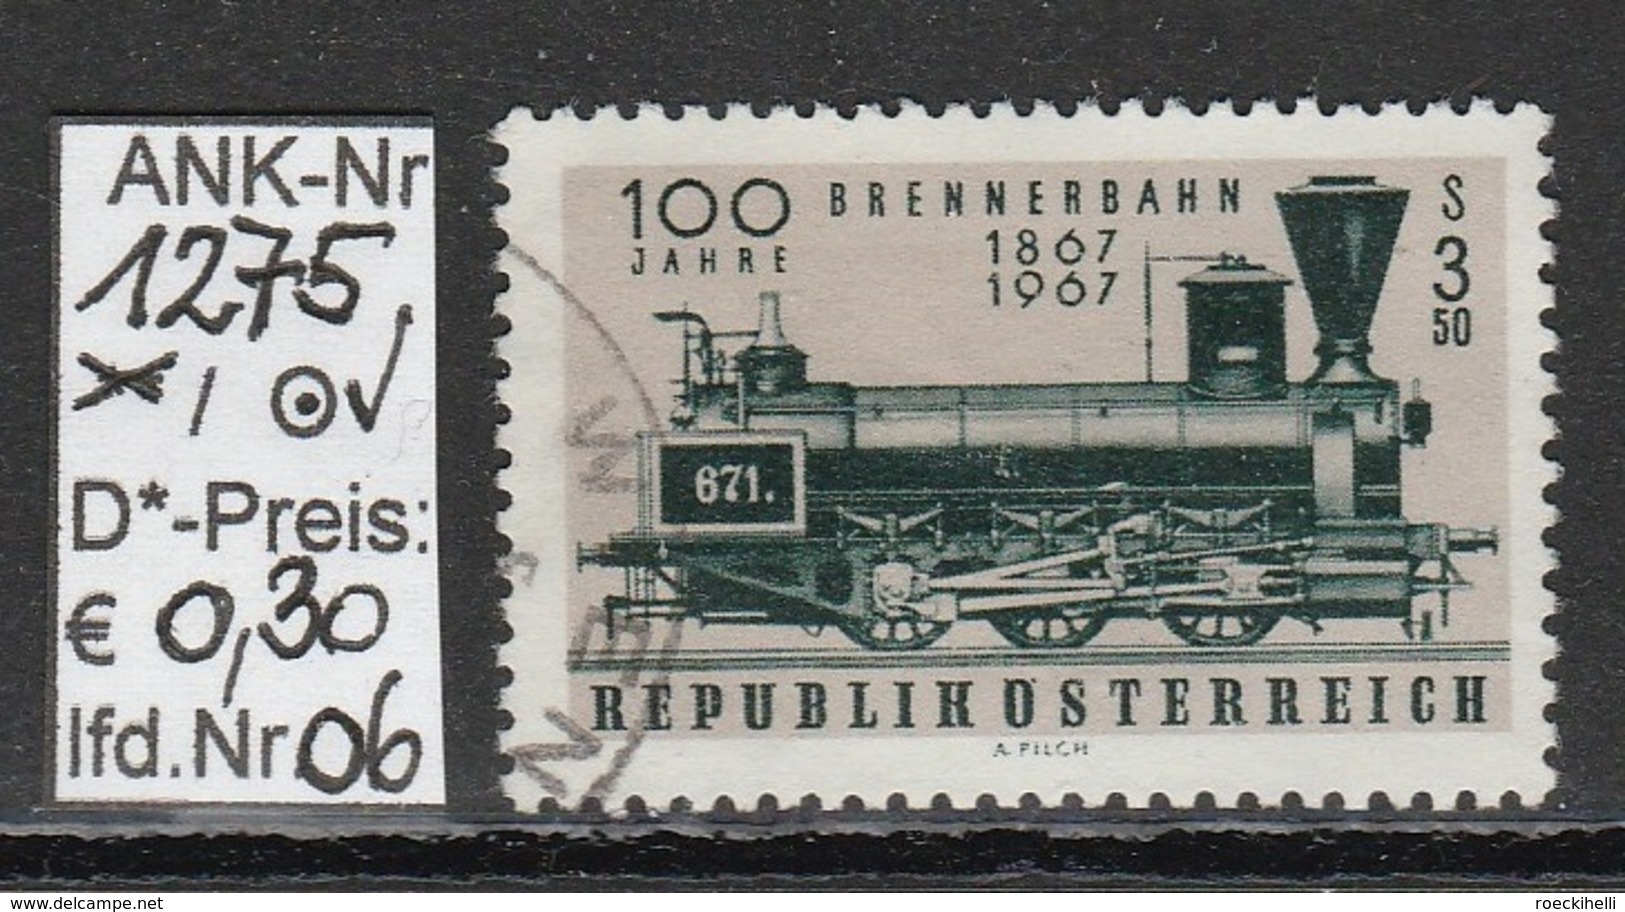 23.9.1967 - SM  "100 Jahre Brennerbahn" -  o gestempelt   - siehe Scan  (1275o 01-08)